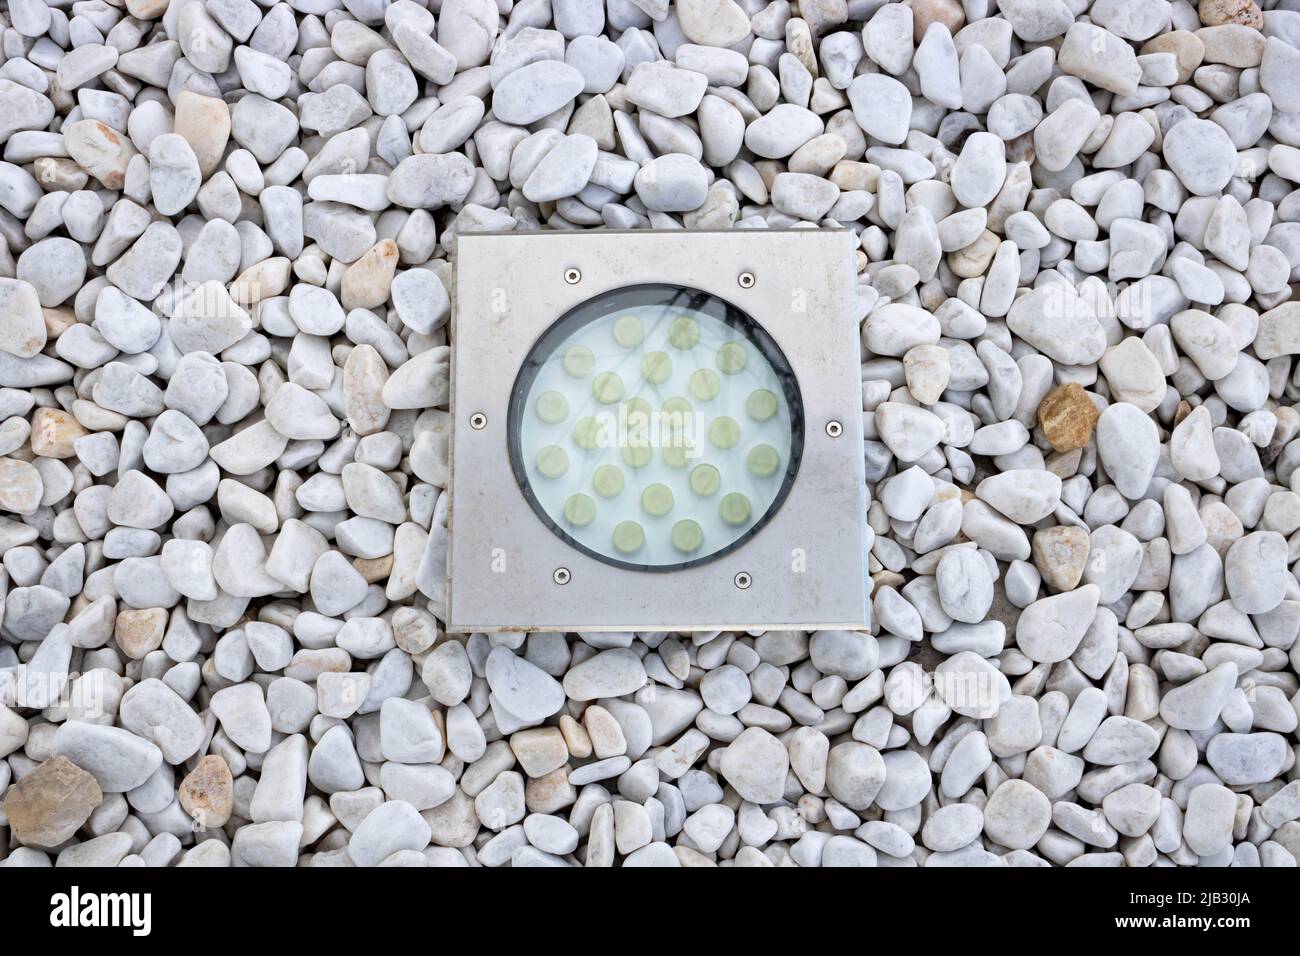 Built-in modern round-shaped lamp on white gravel in the garden. Stock Photo